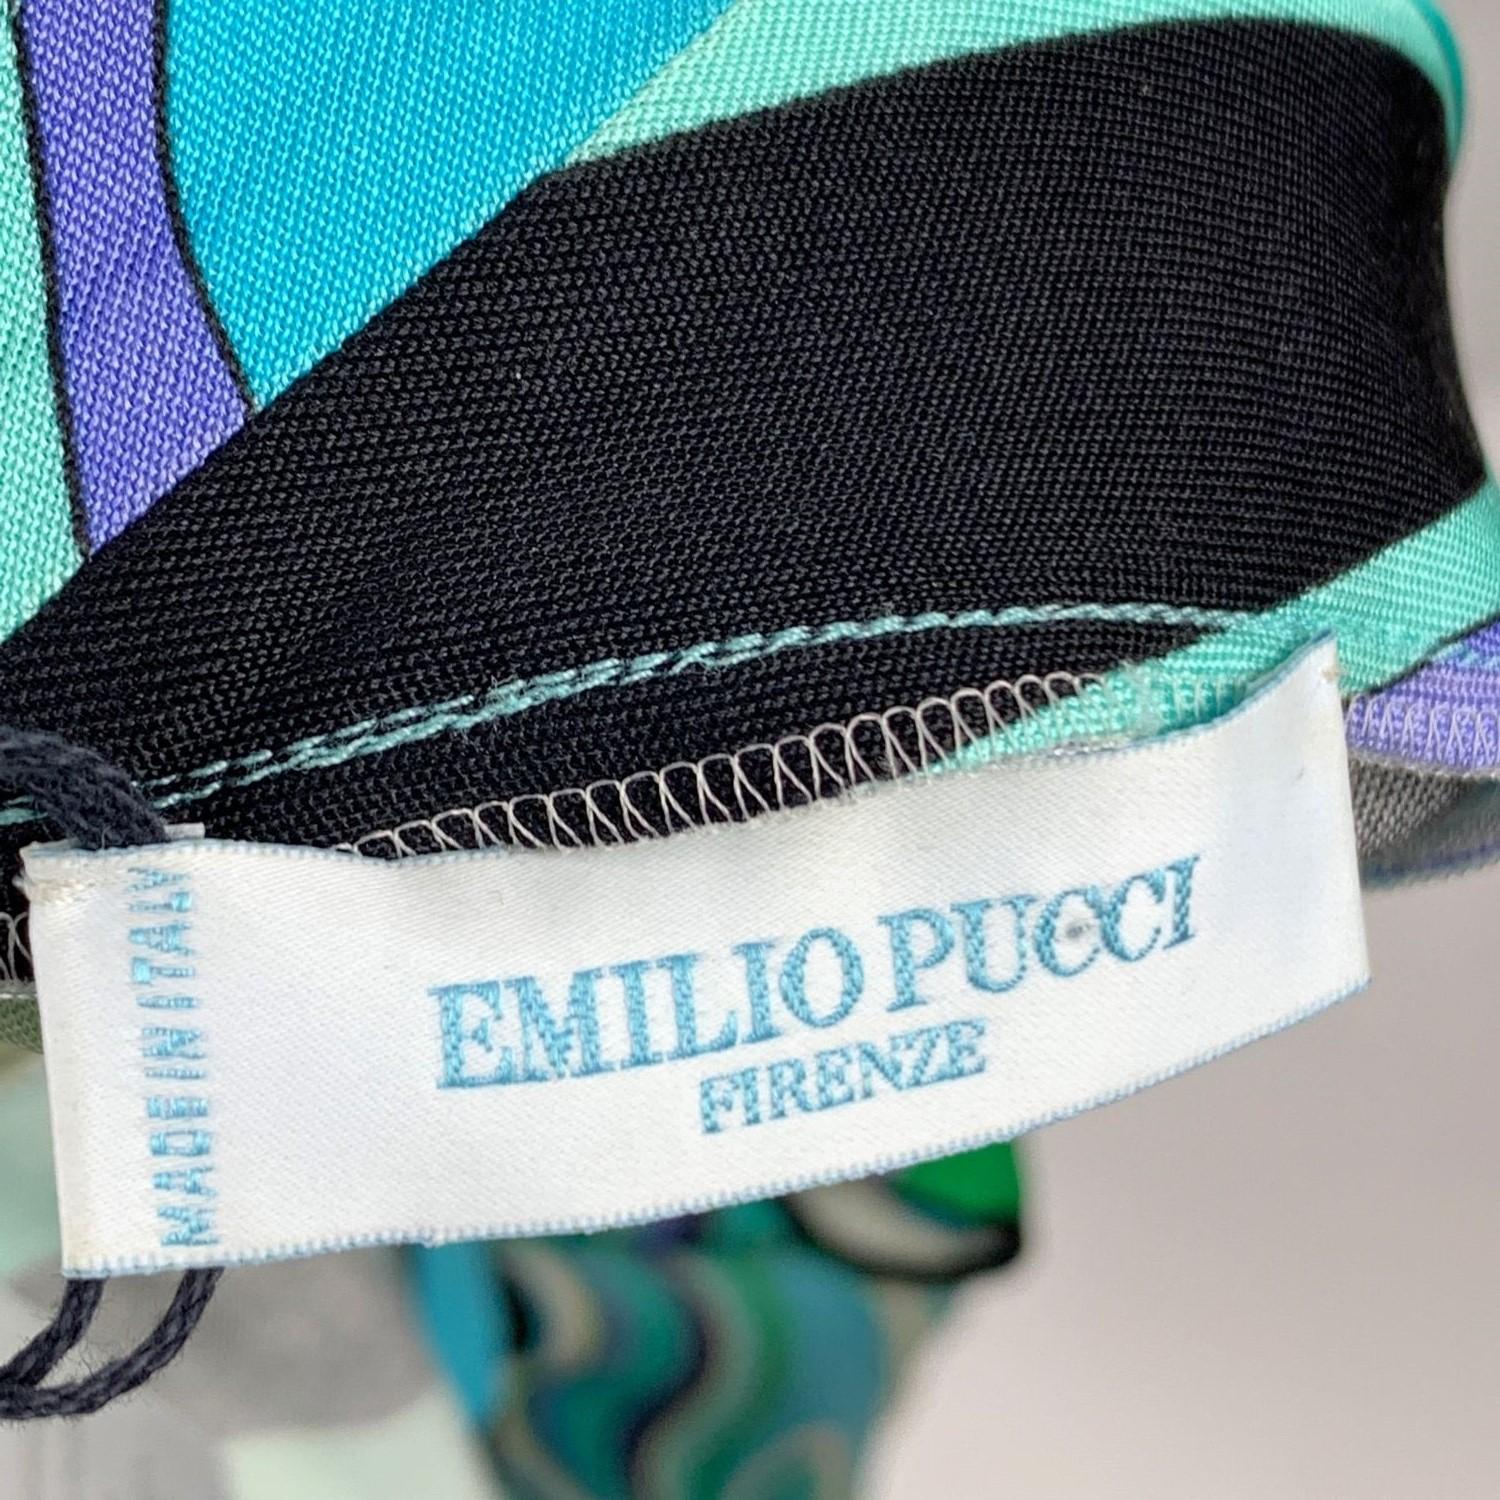 Emilio Pucci Turquoise Printed Silk Jersey Sleeveless Dress Size 42 IT 2